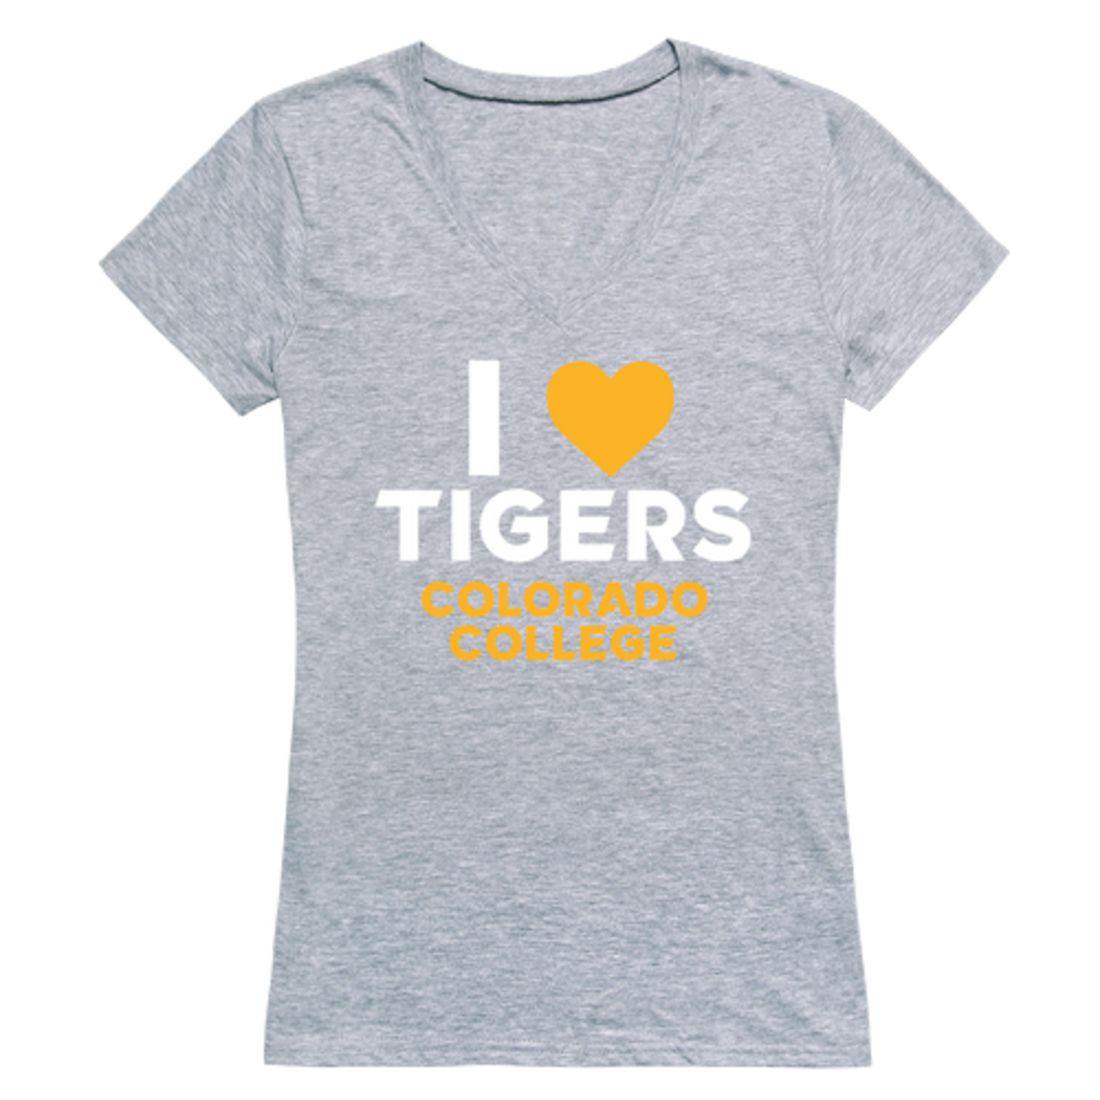 I Love Colorado College CC Tigers Womens T-Shirt-Campus-Wardrobe